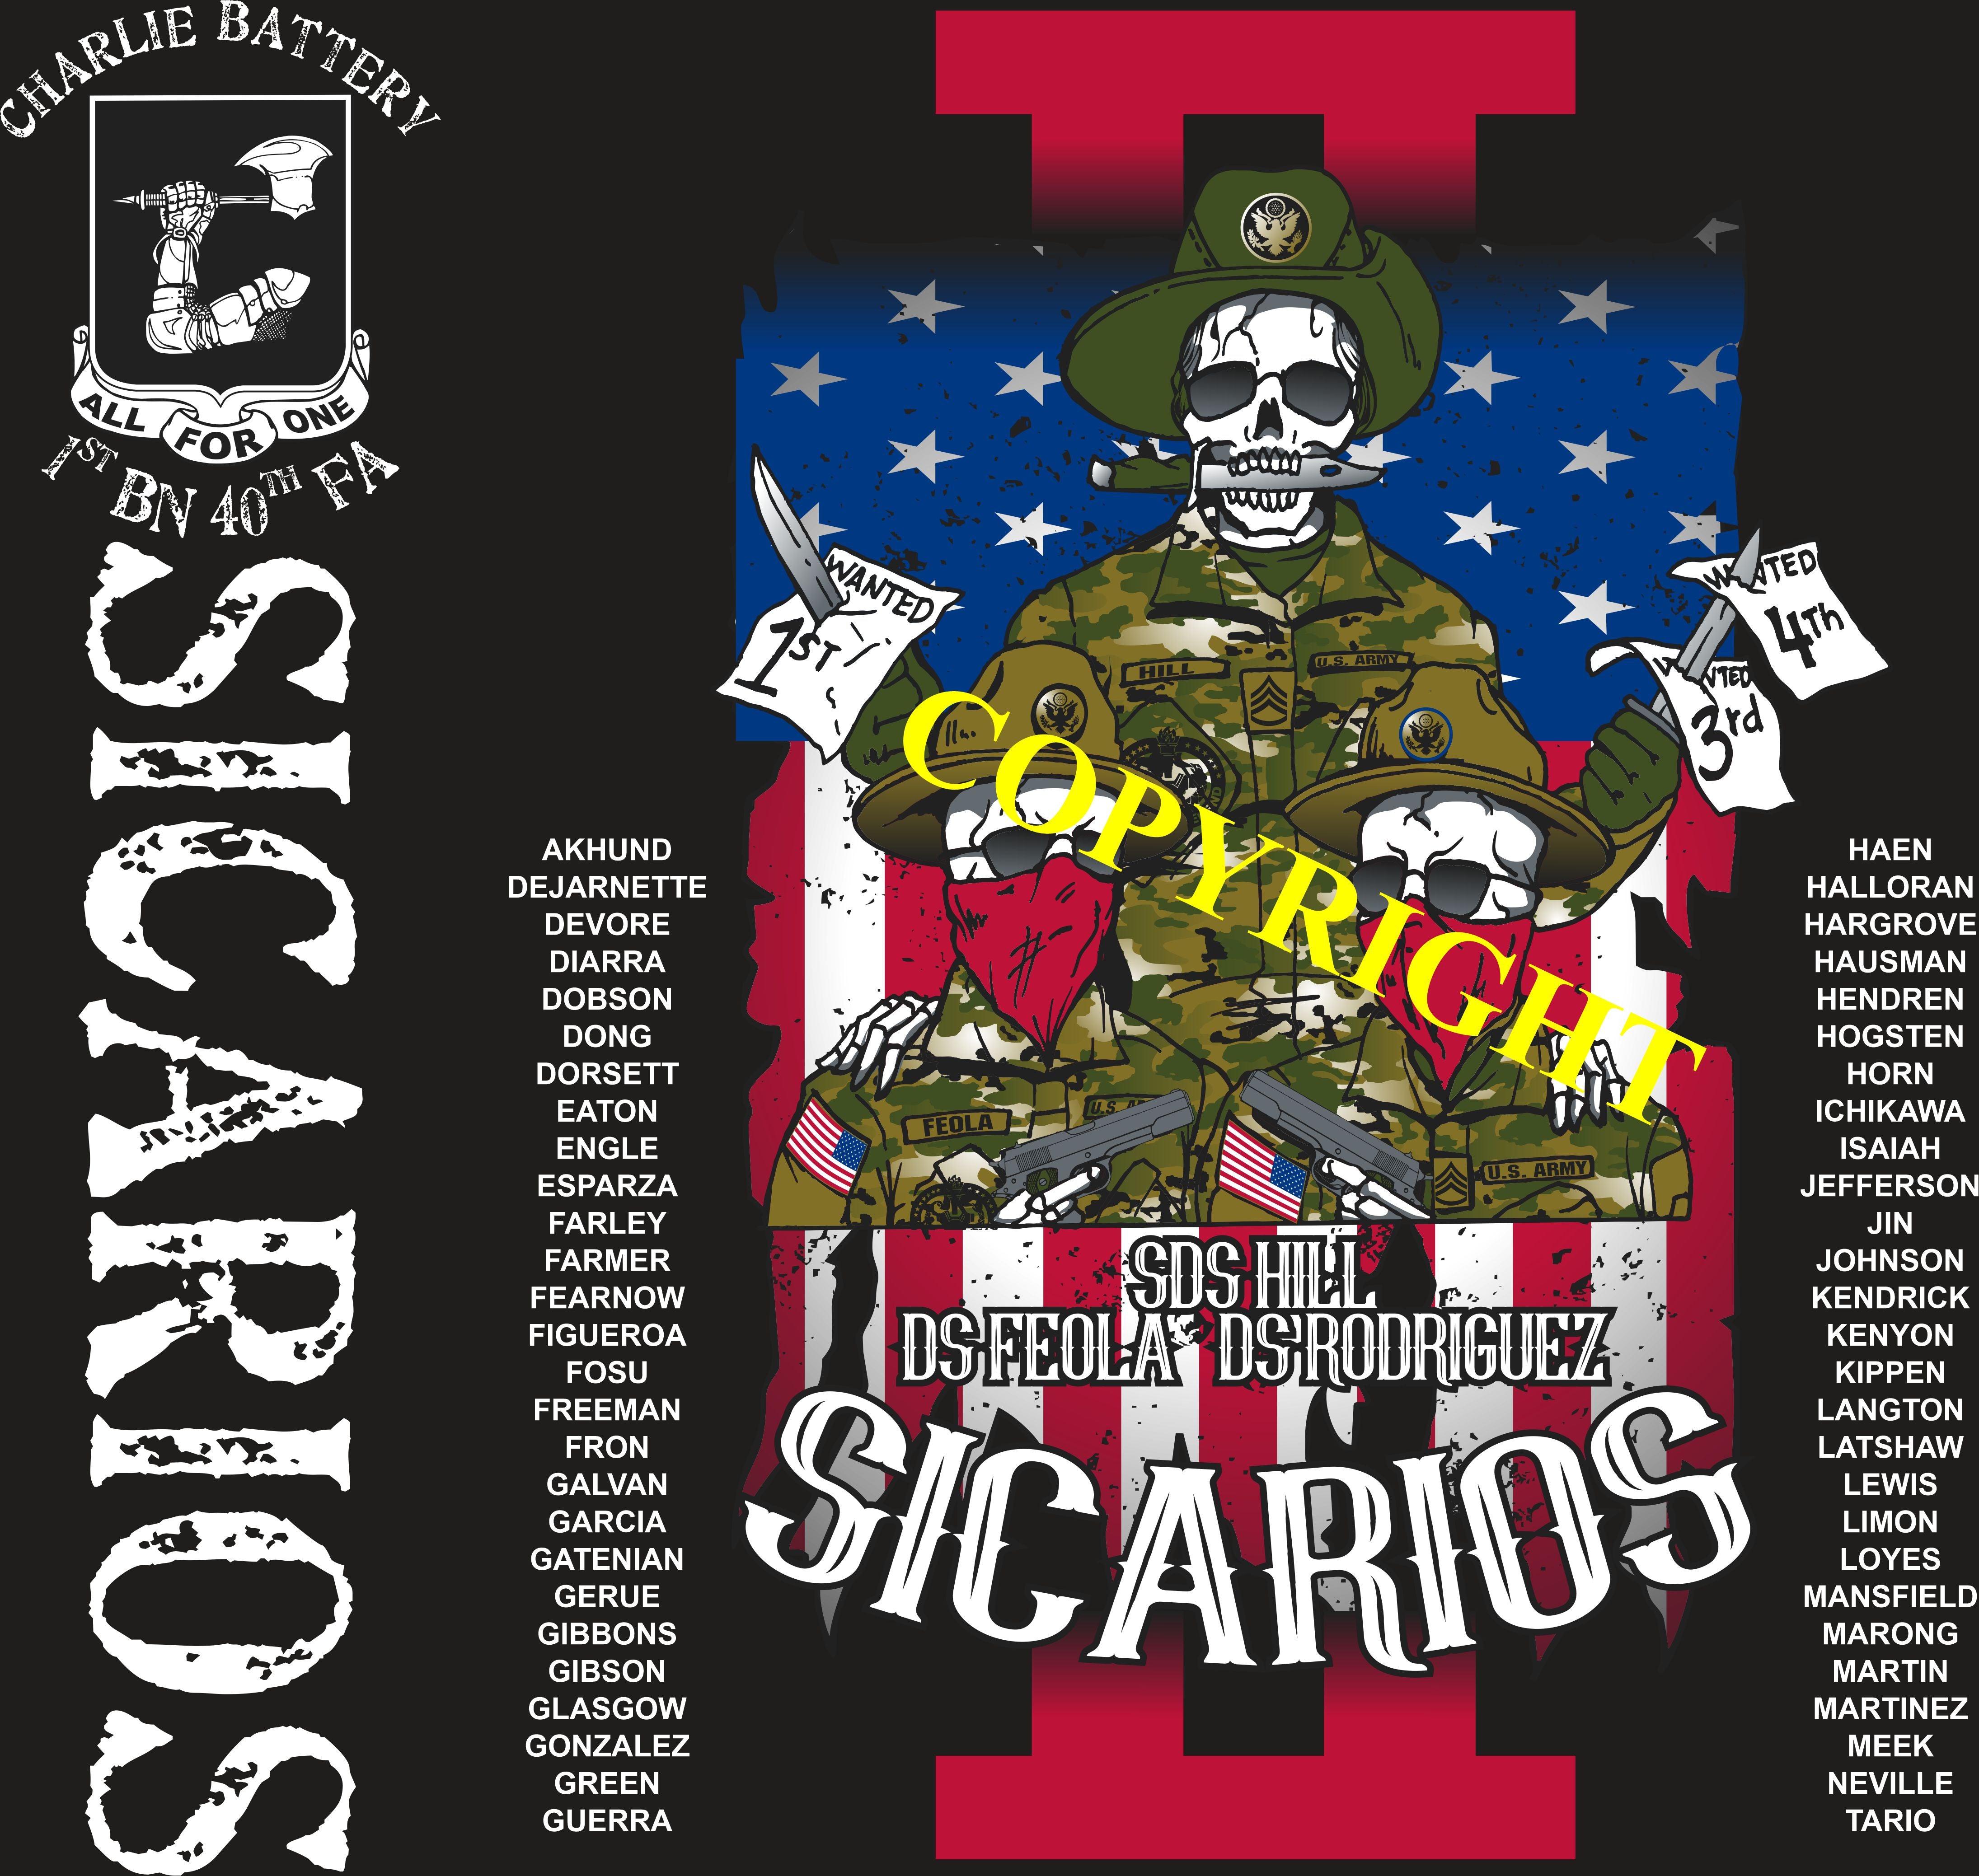 Platoon Shirts (2nd generation print) CHARLIE 1st 40th SICARIOS SEPT 2021